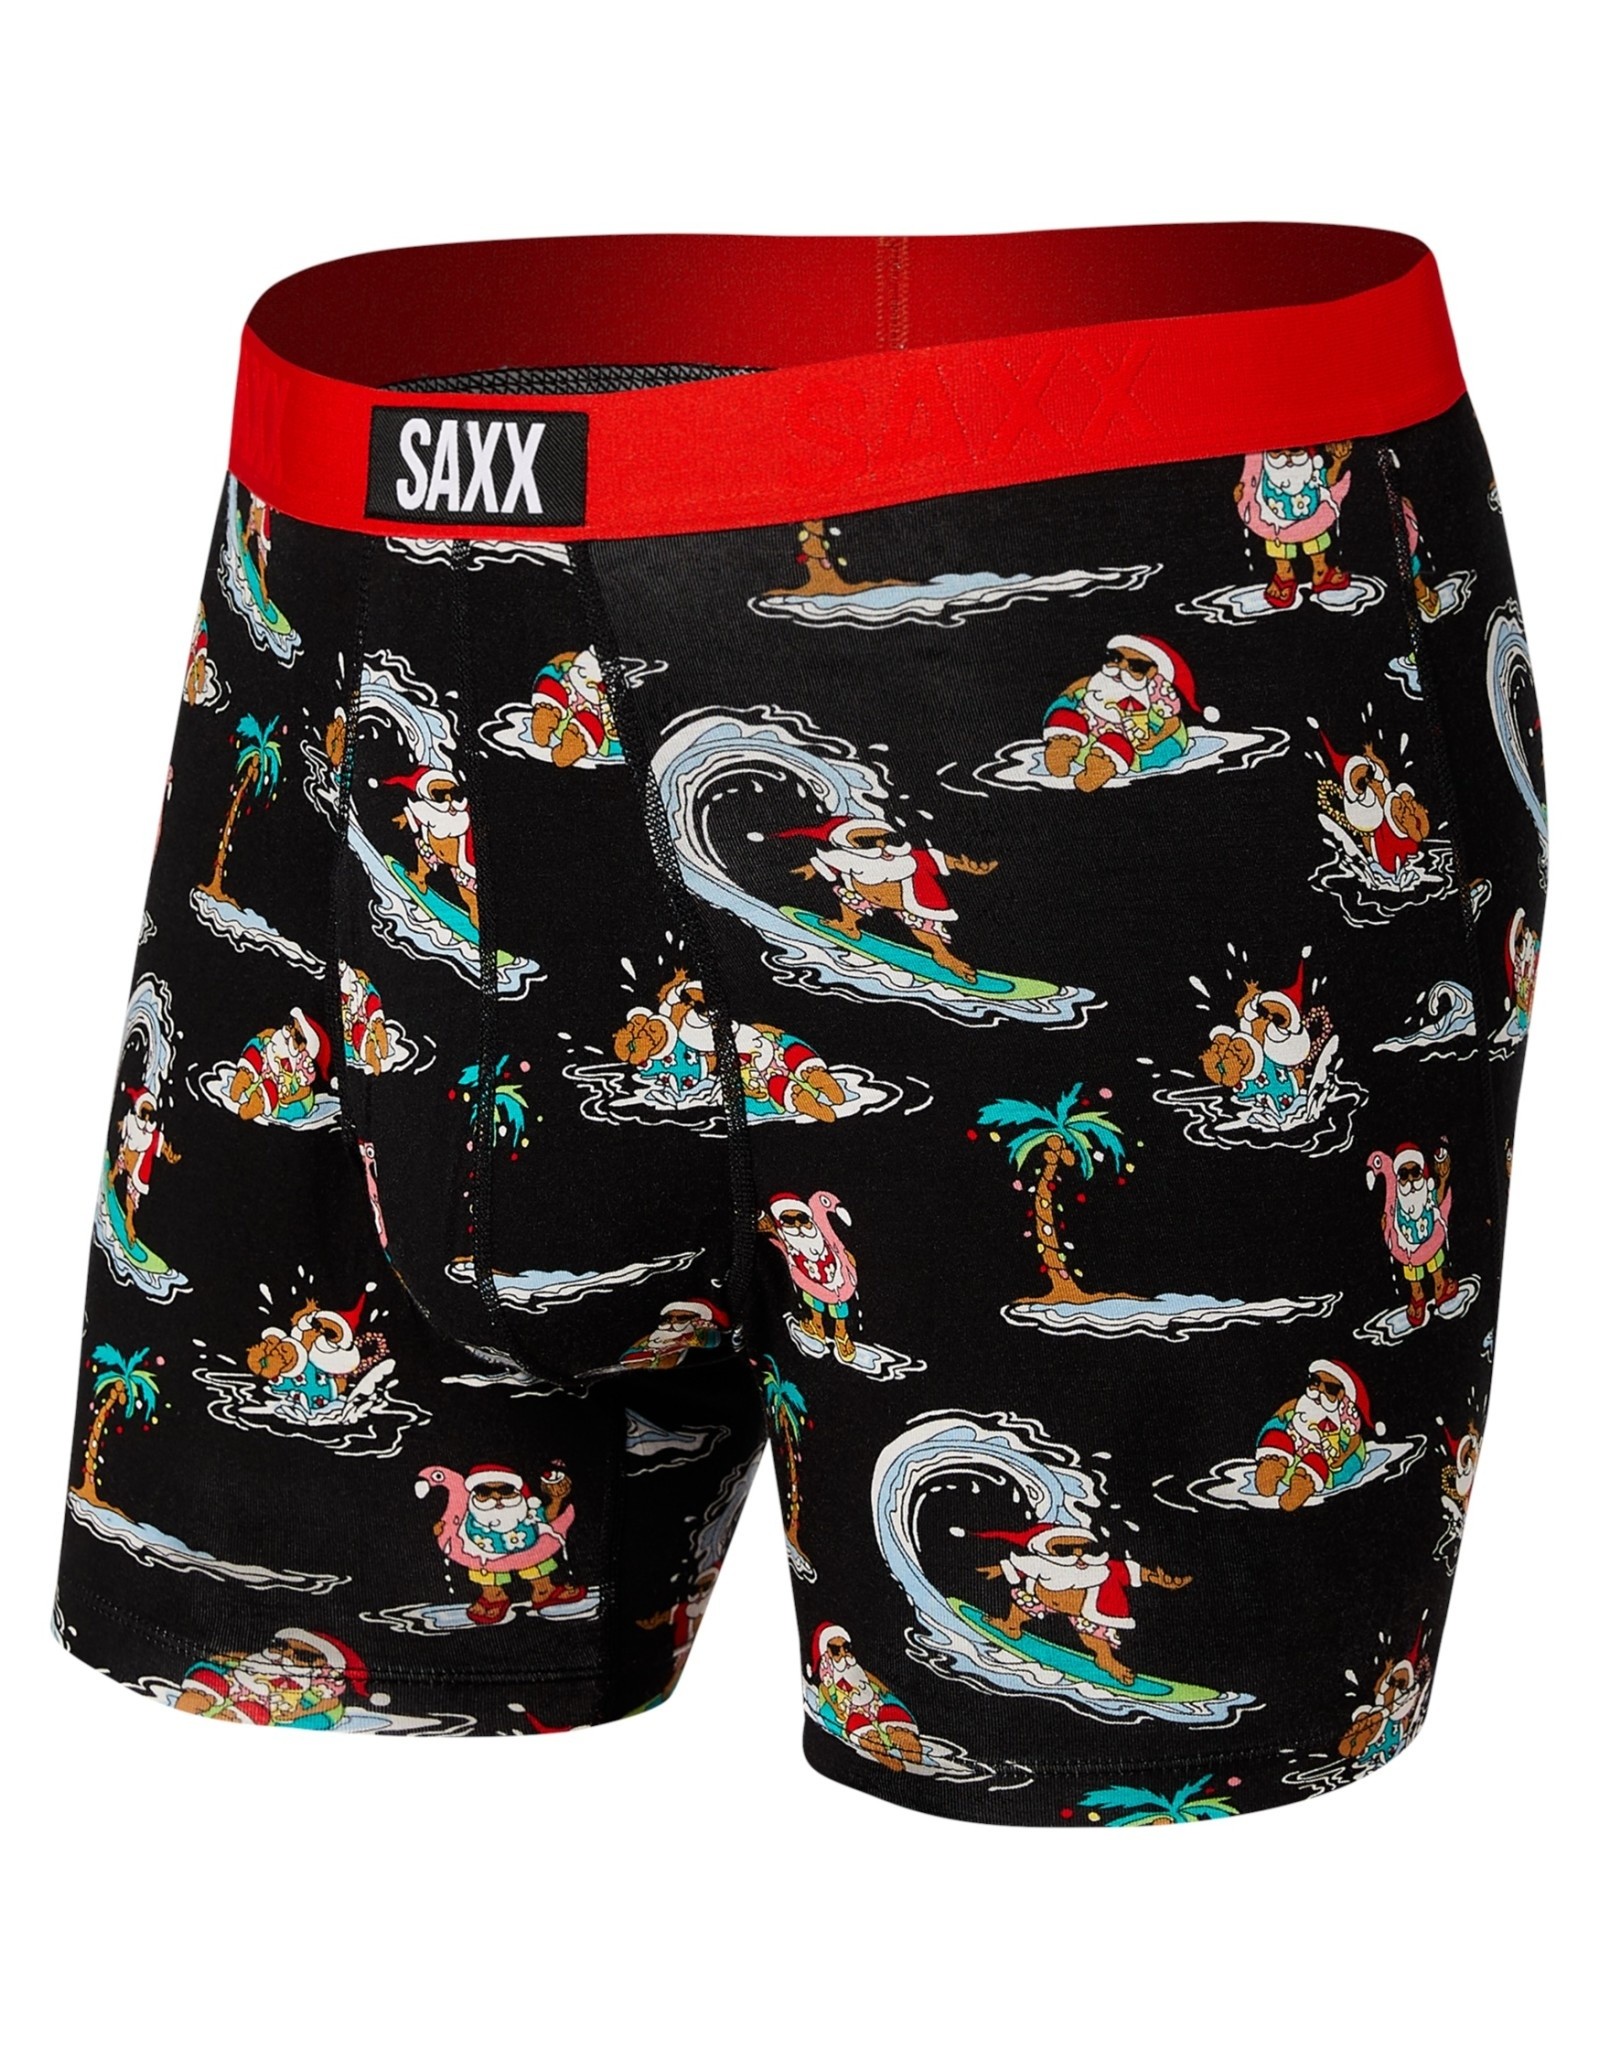 x3 Boxer Briefs Trunks Flags Pack Frank and Beans Underwear BB S M L XL XXL